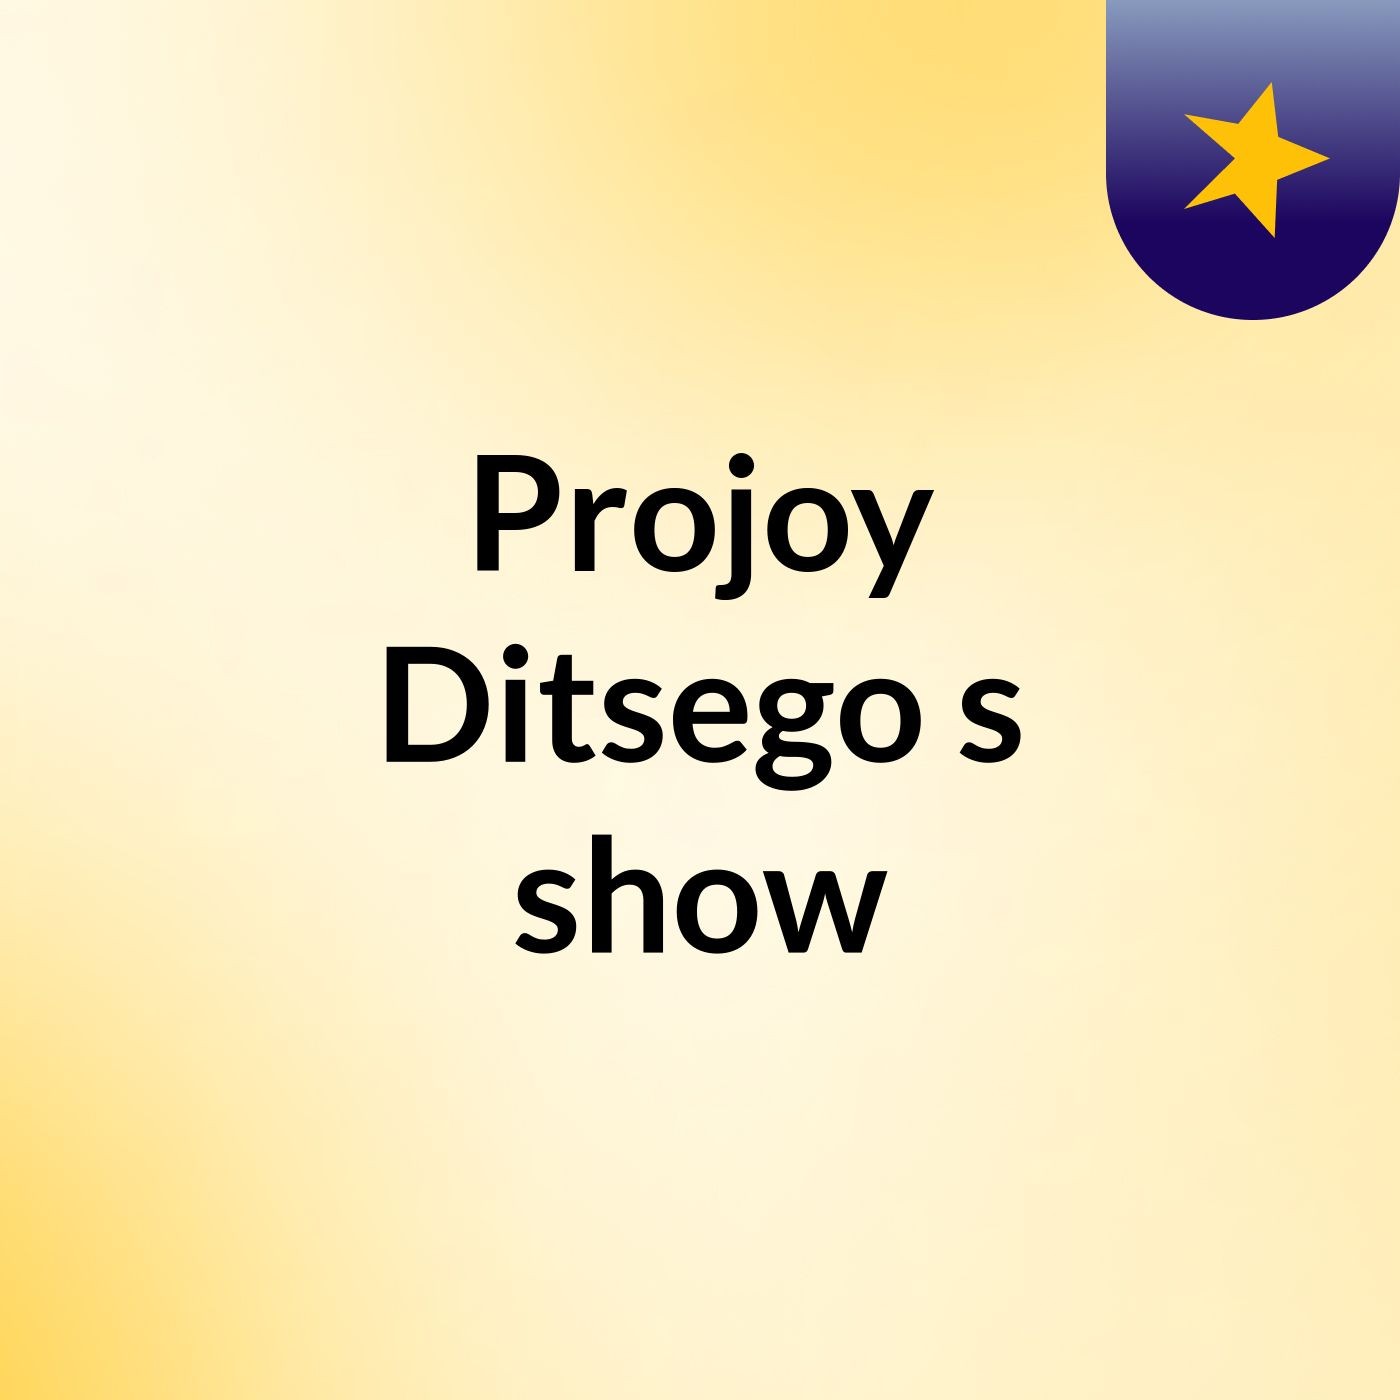 Projoy Ditsego's show